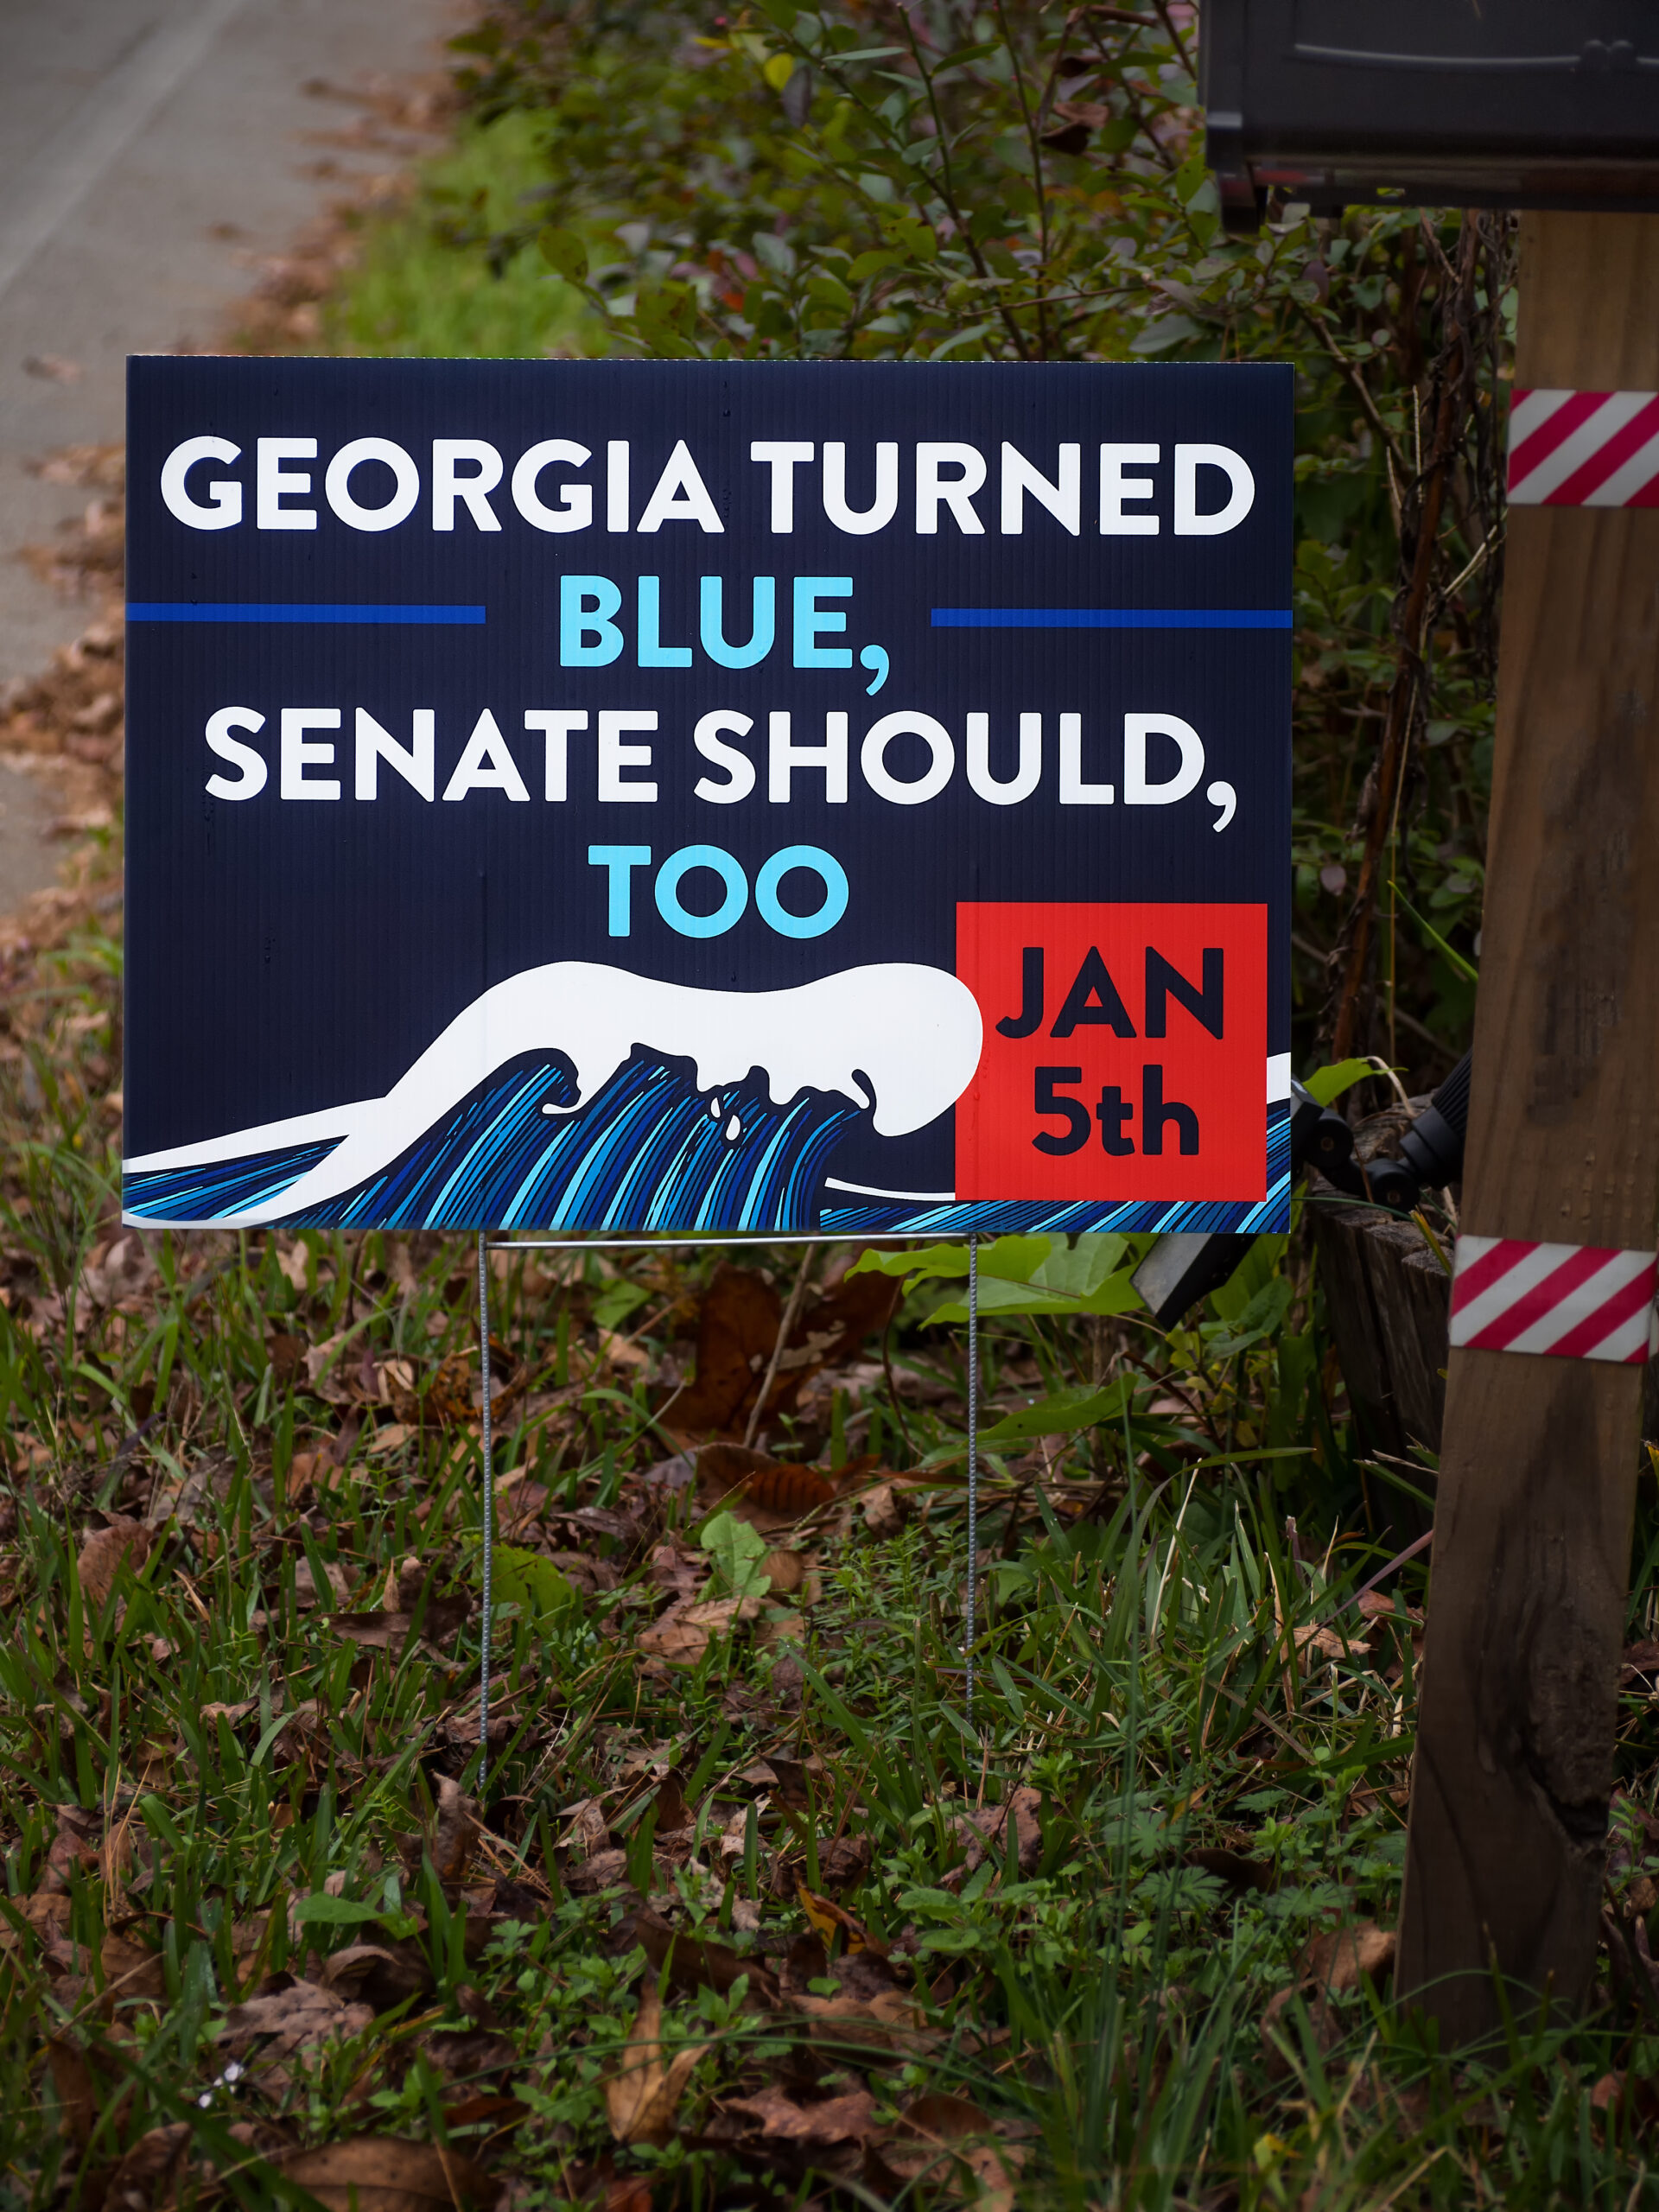 Sign in Georgia: Georgia turned blue, Senate should too